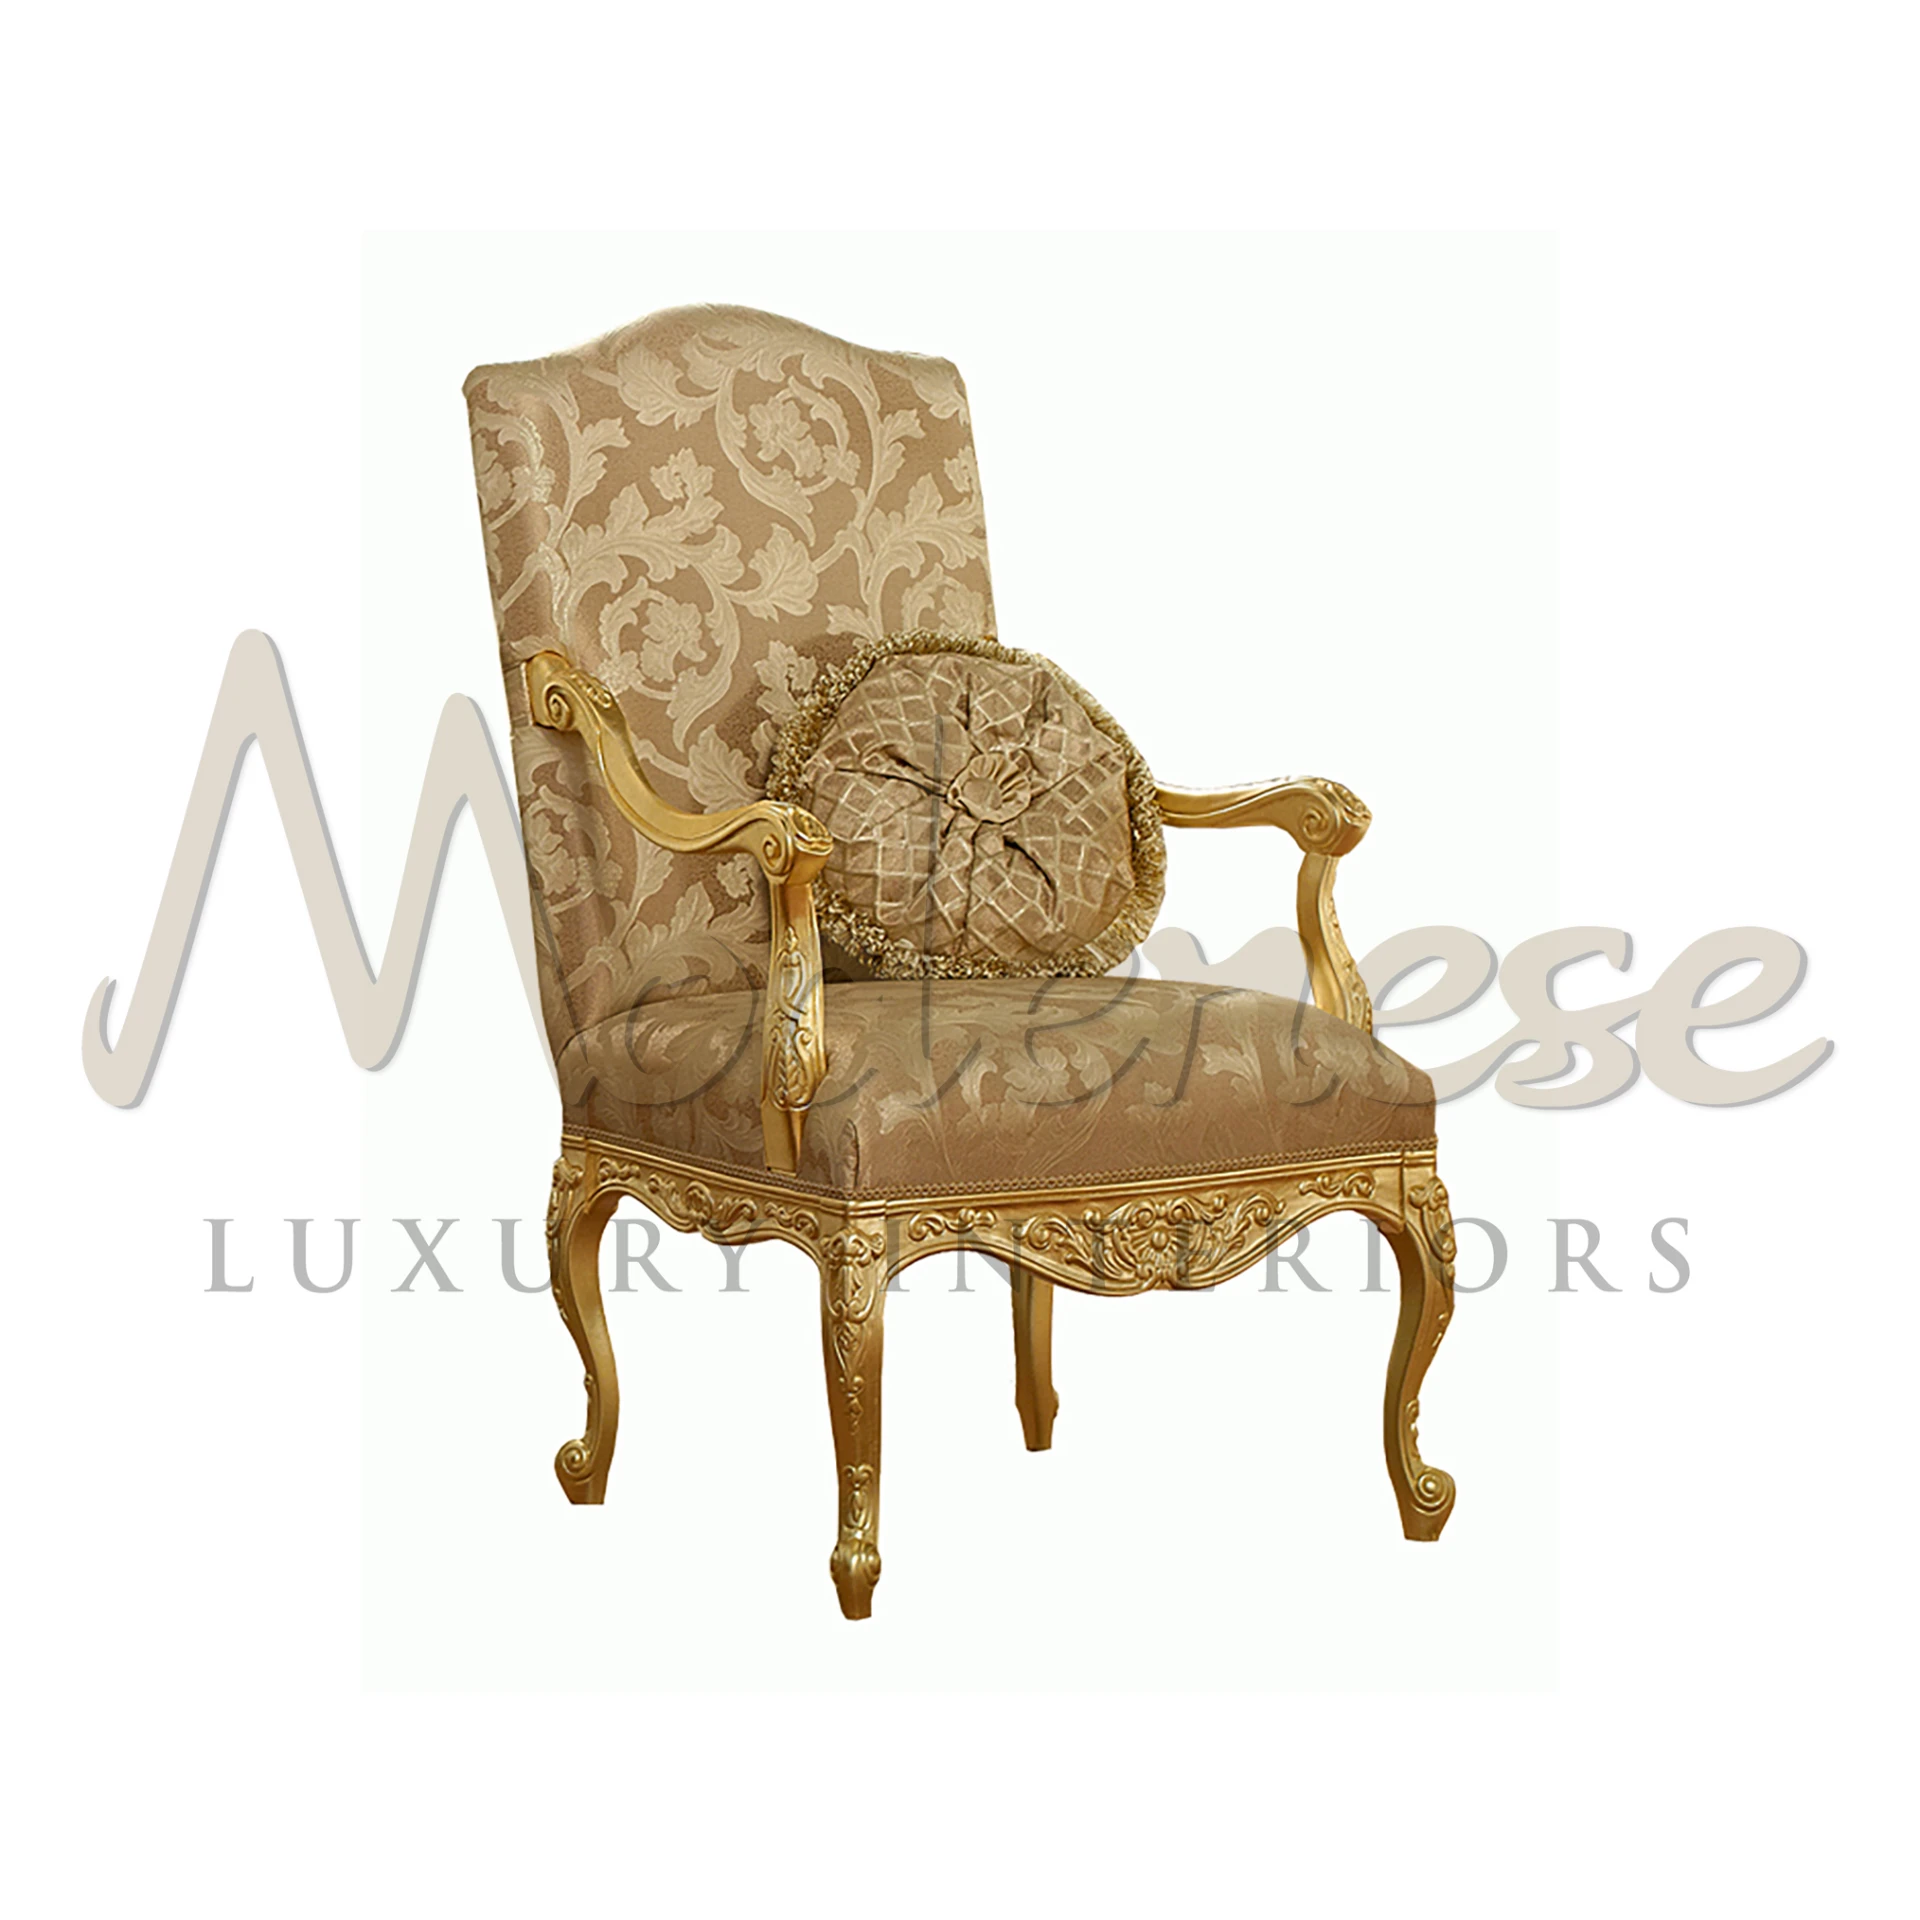 Ornate Gold Armchair with Plush Cushion